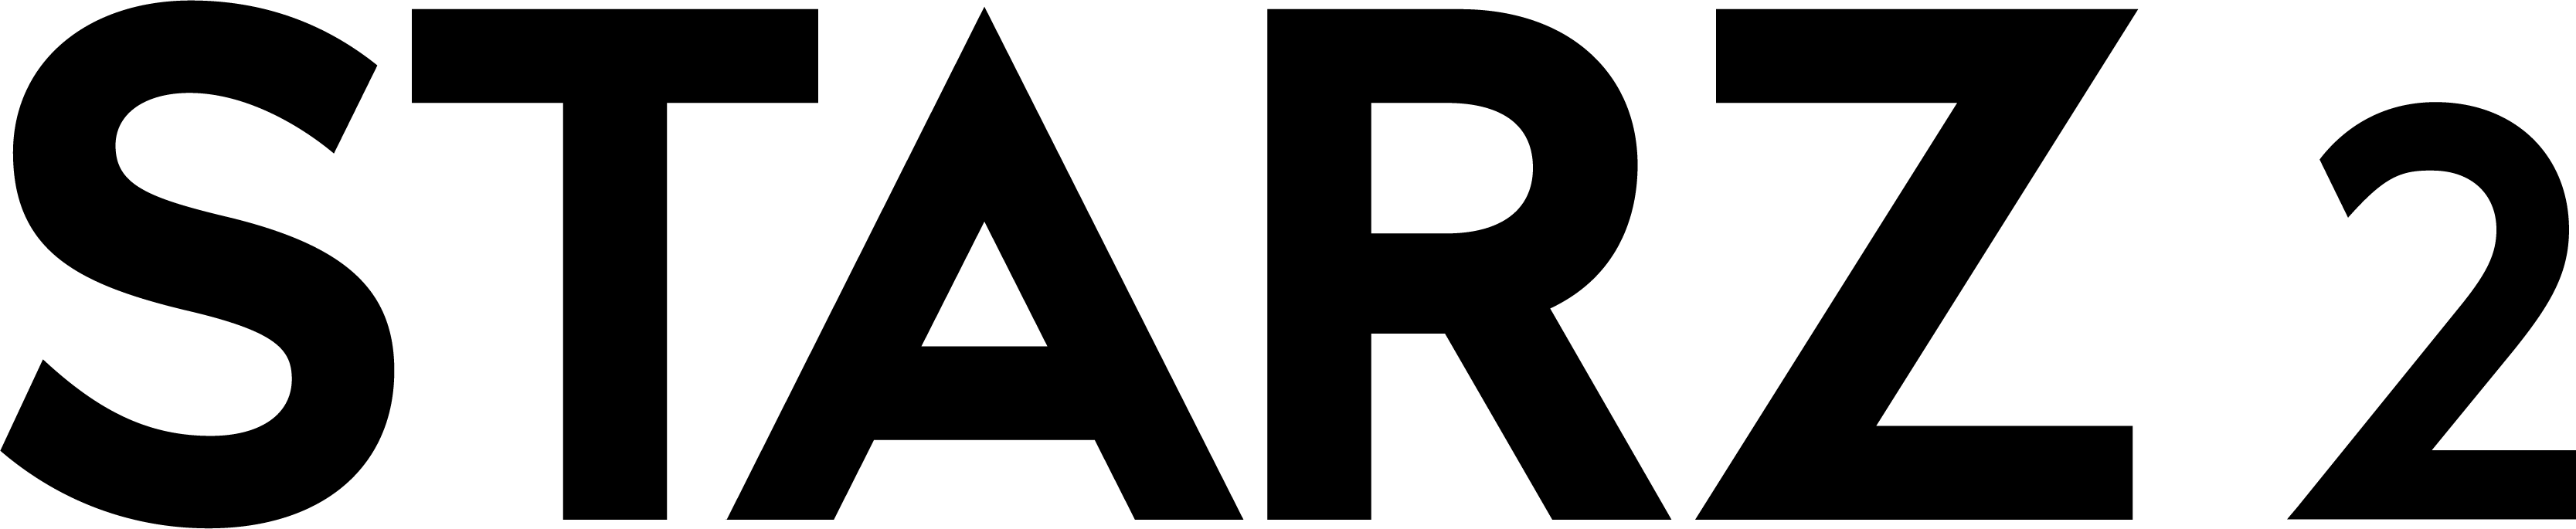 Channel logo for STARZ 2